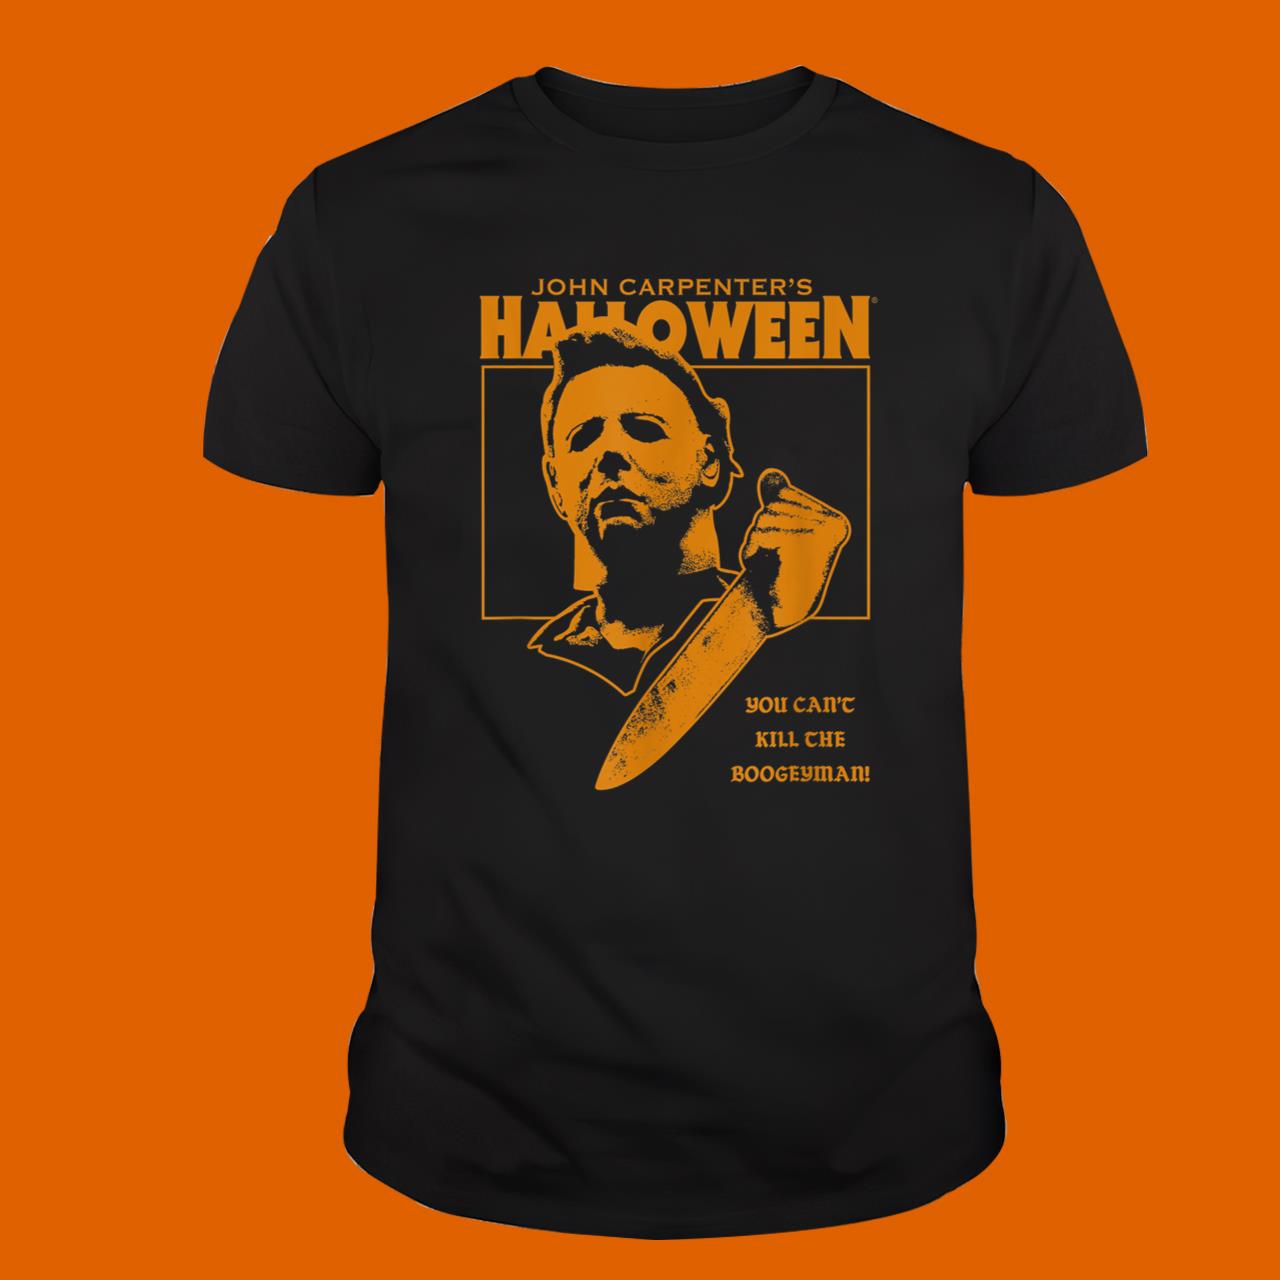 Halloween You Can’t Kill the Boogeyman! T-Shirt